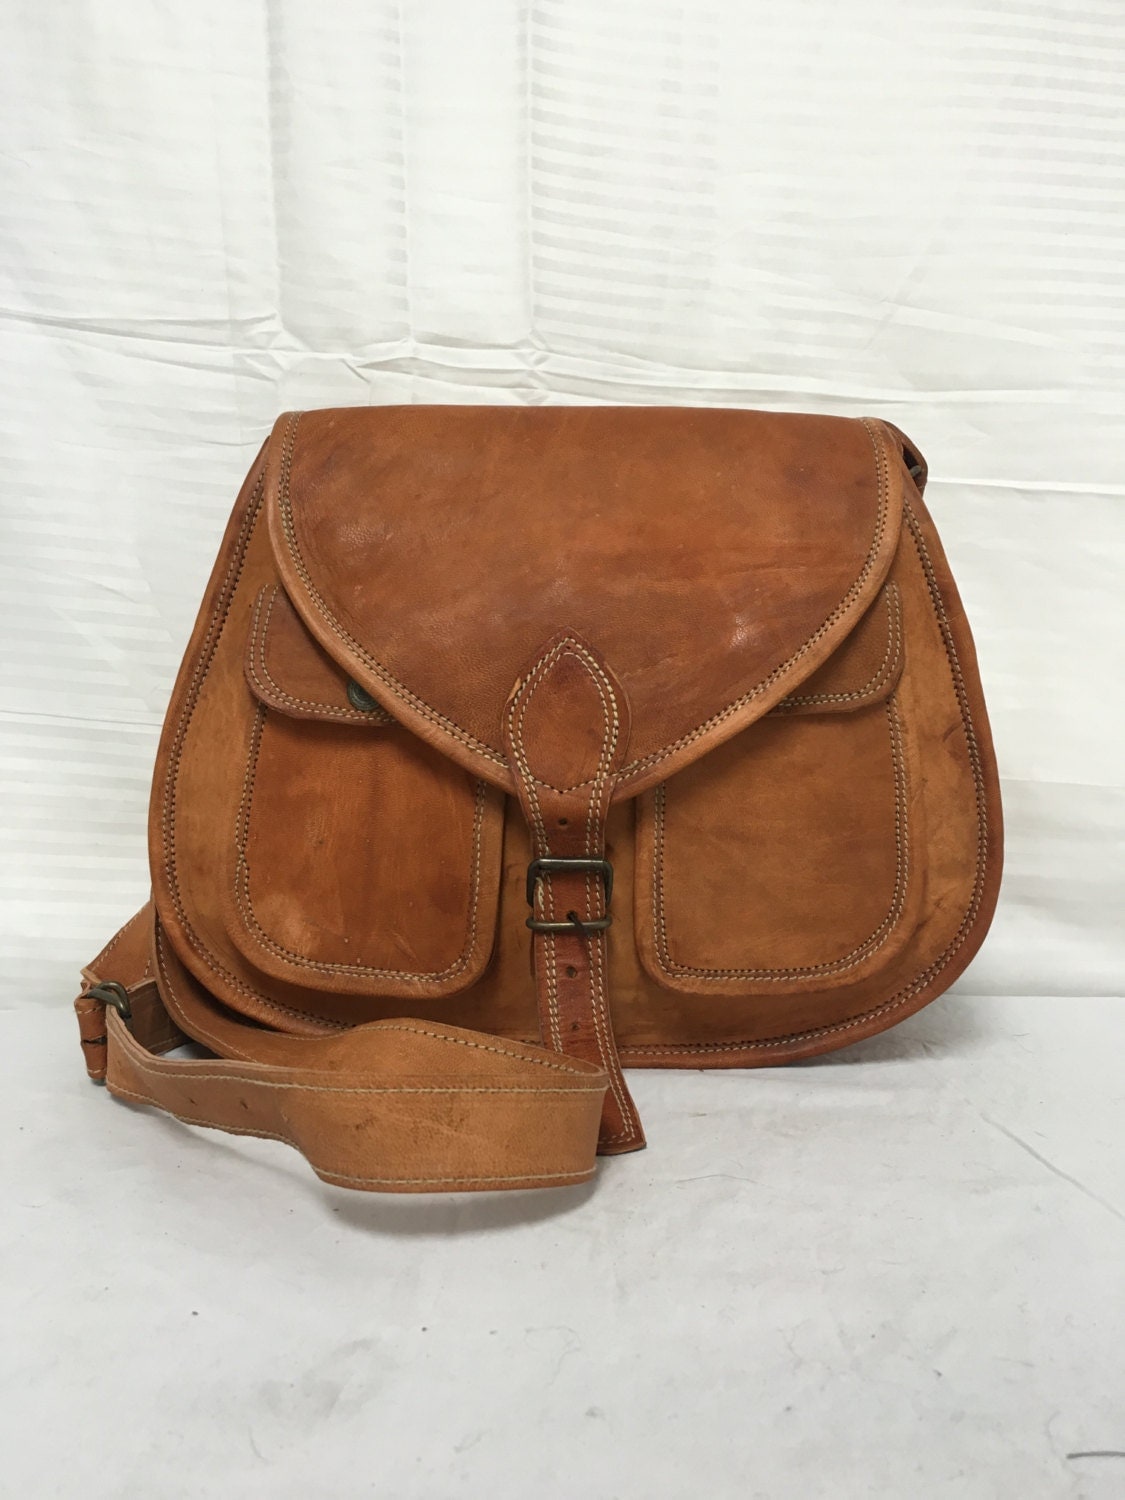 Cross Body Purse brown leather cross body saddle bag purse